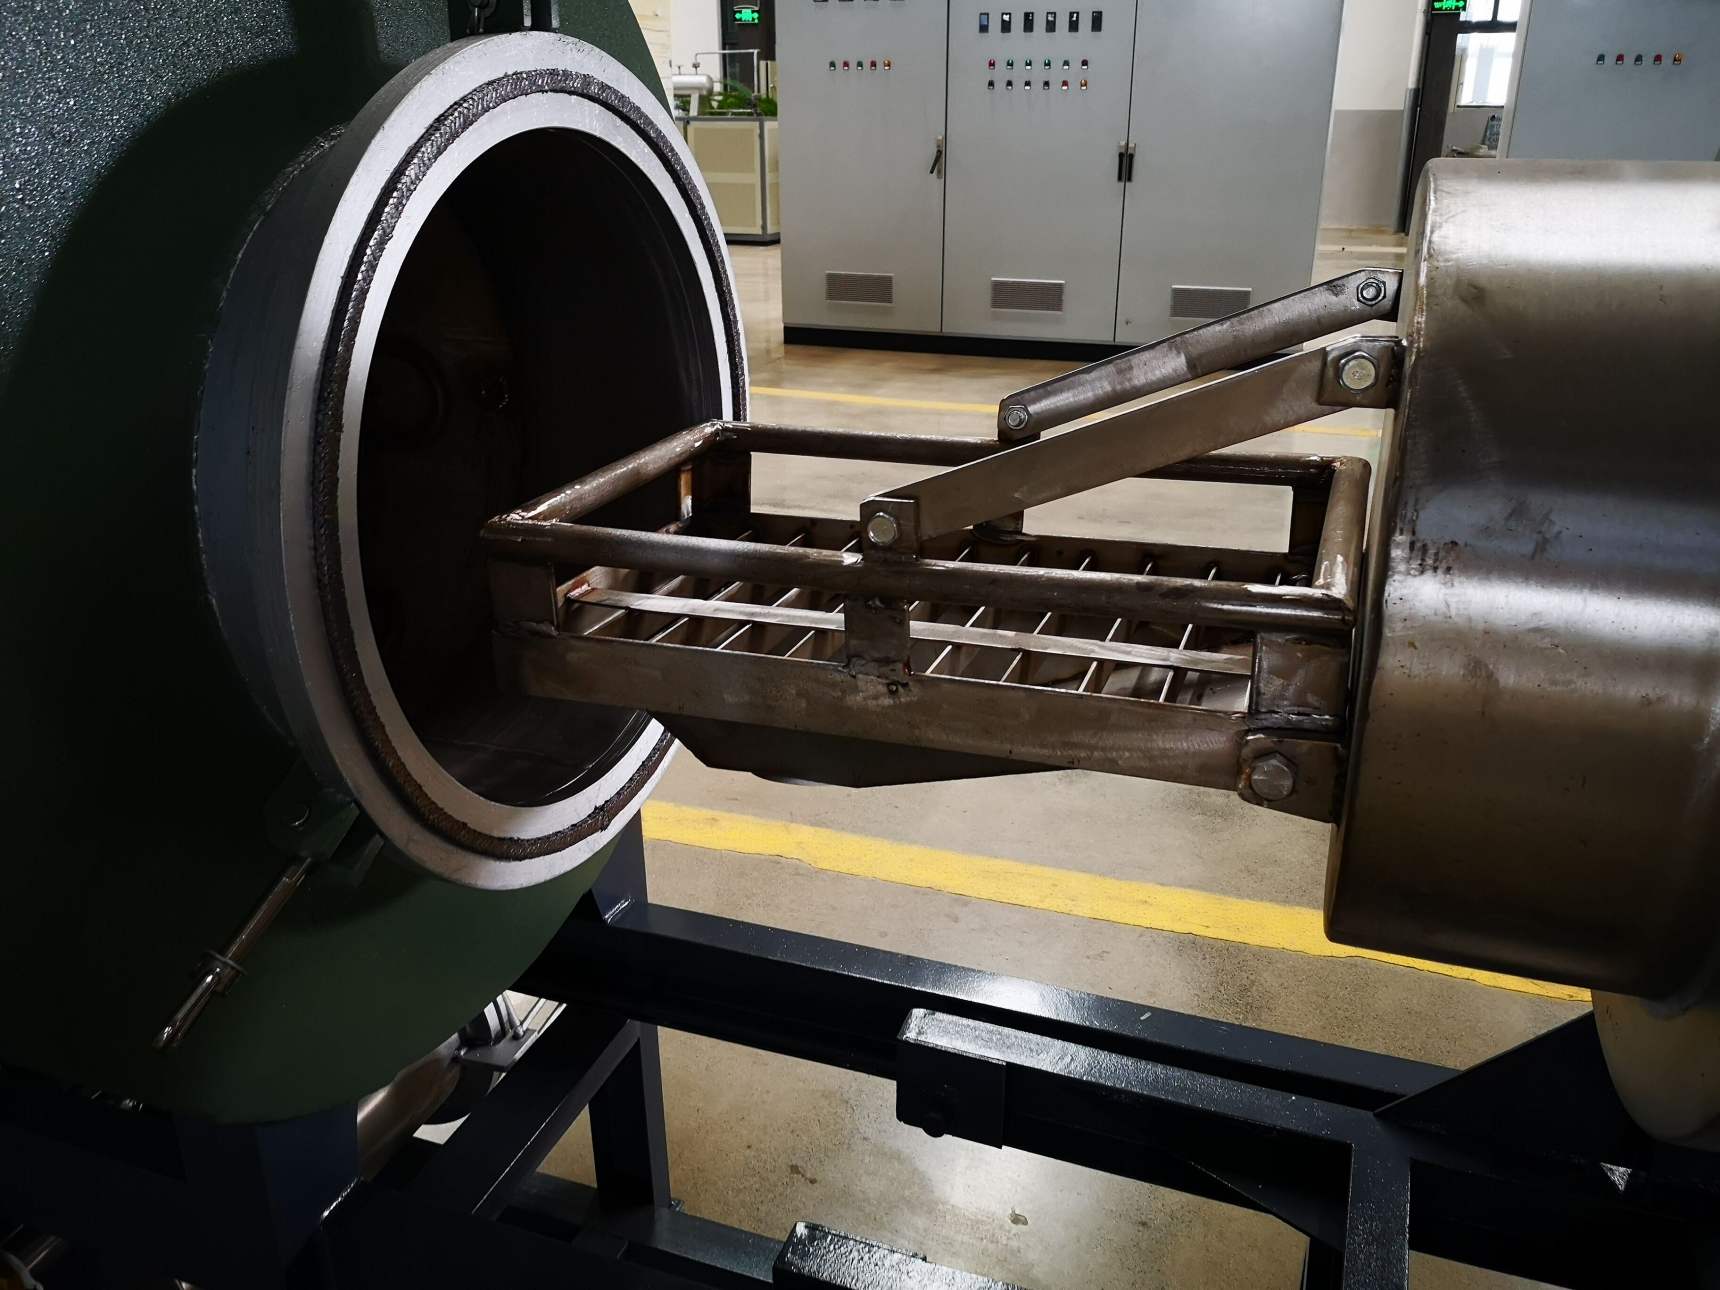 380V/50HZ carbon steel spinneret cleaning vacuum calcination furnace